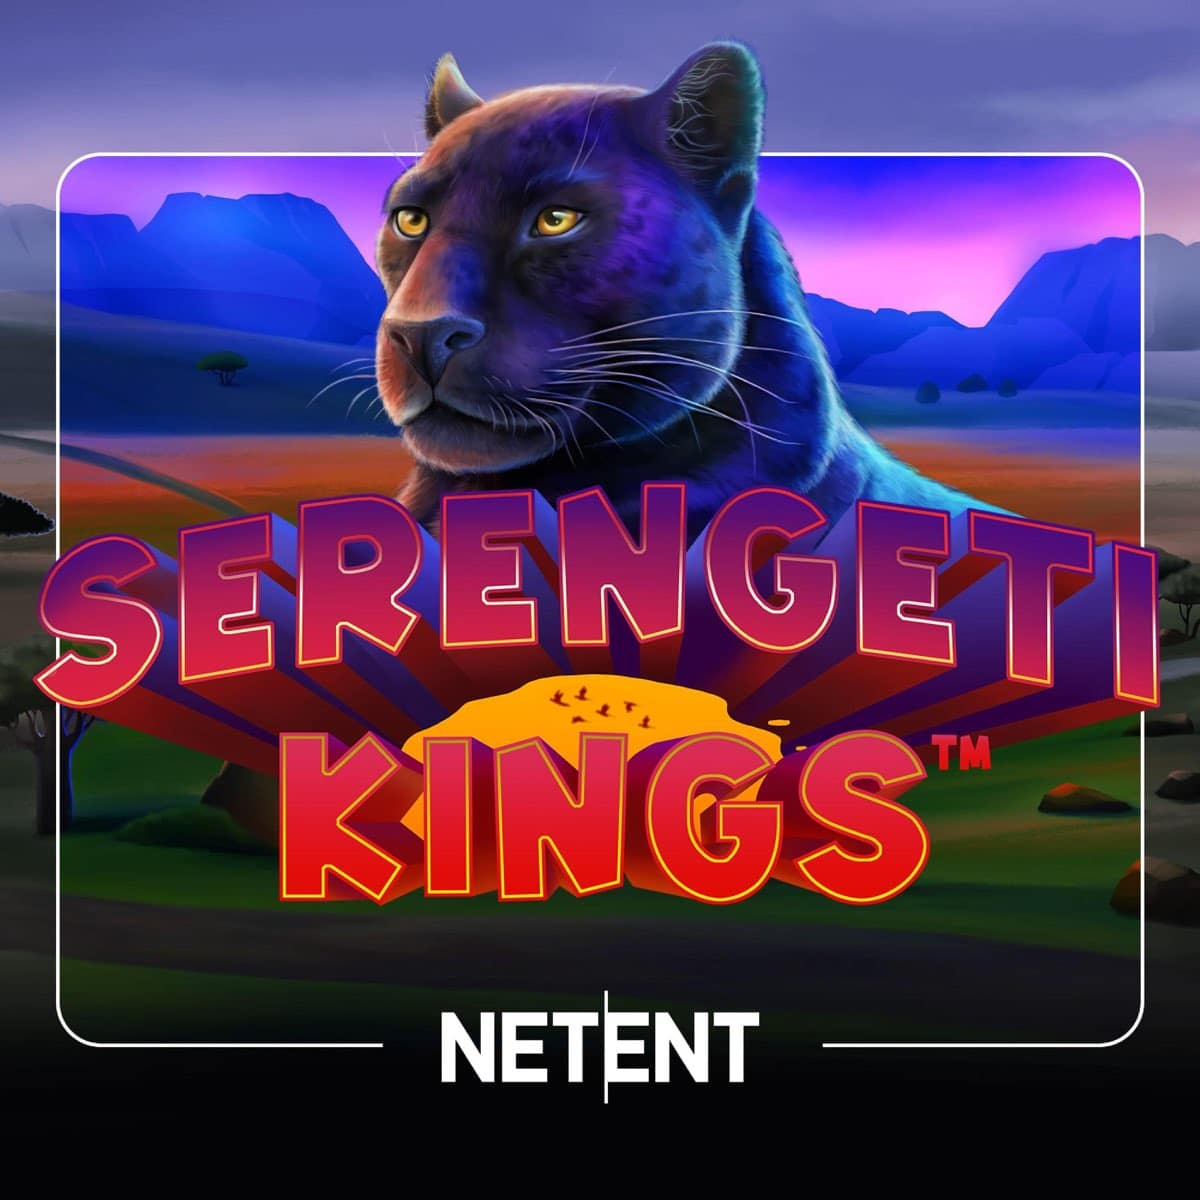 Serengeti kings slot logo